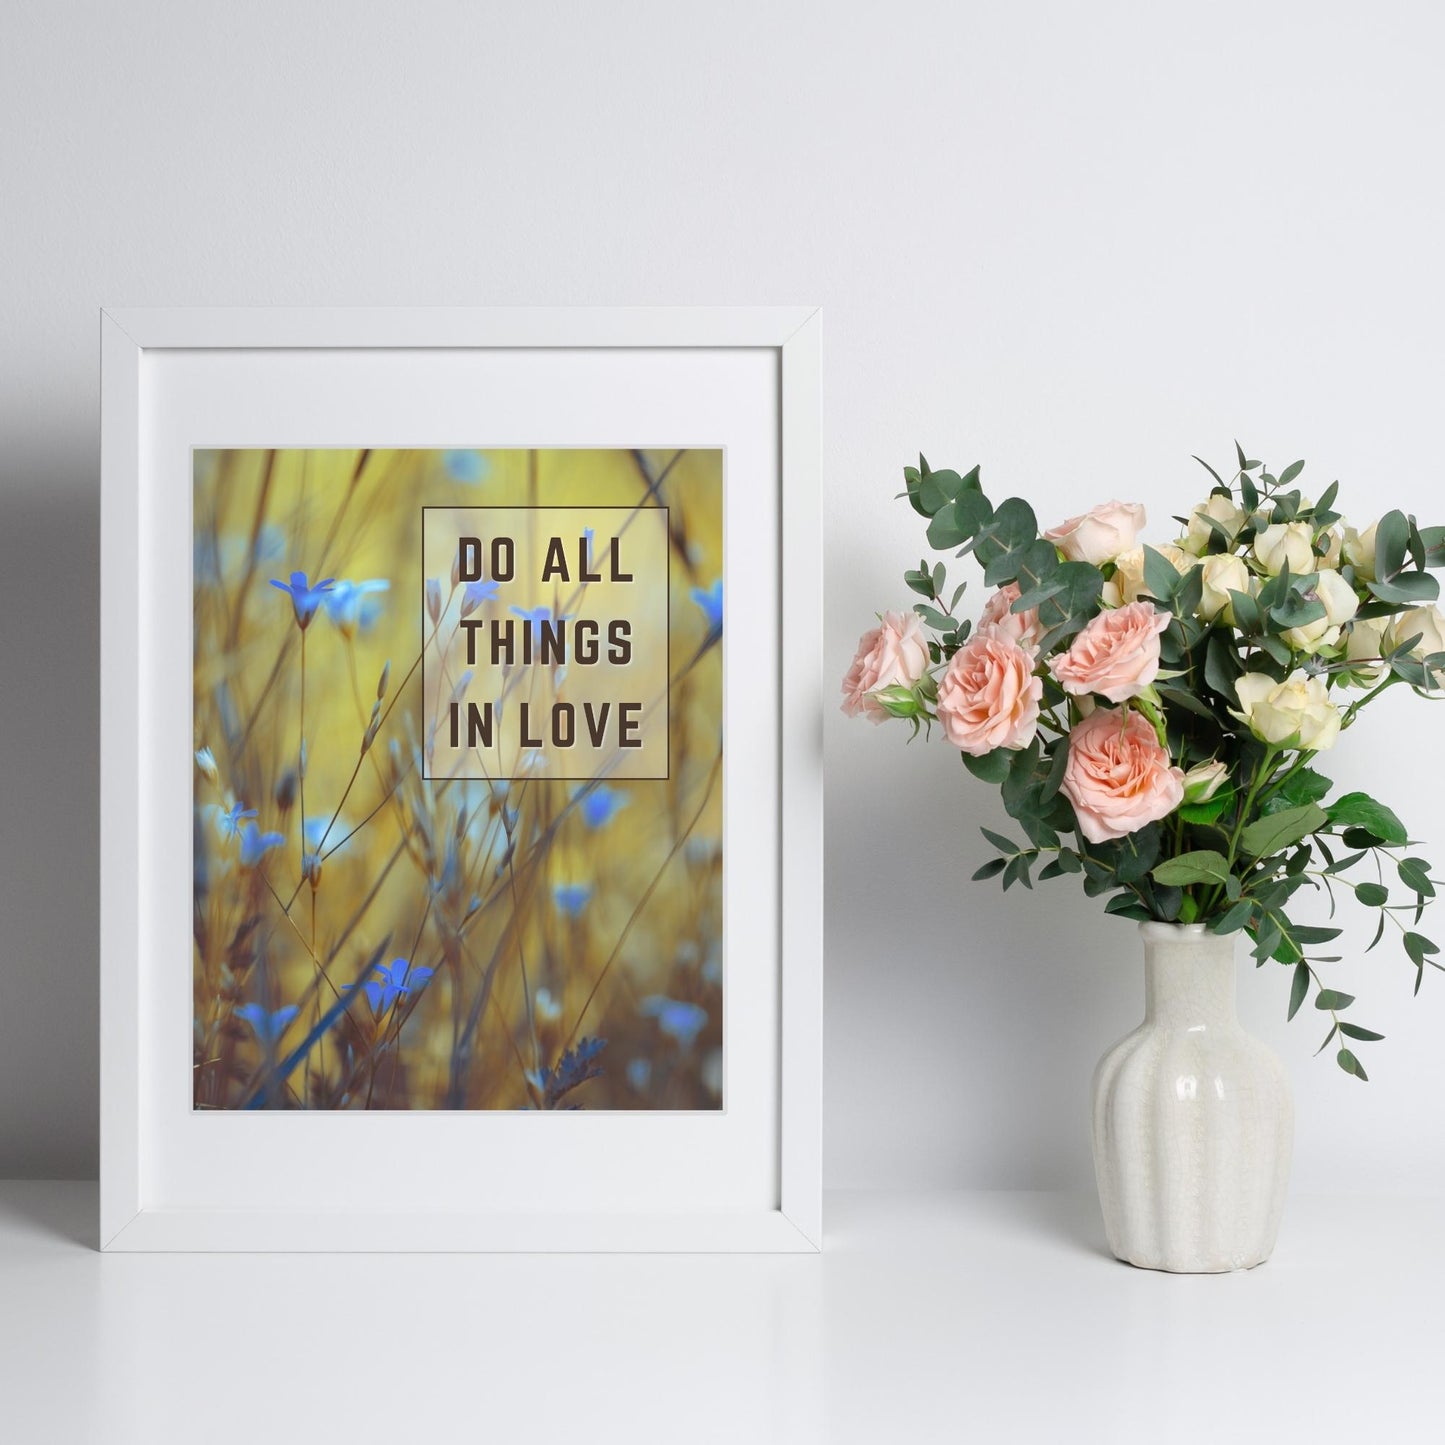 Inspirational Word Art - DO ALL THINGS IN LOVE (1 Corinthians 16:14) - Wild Flower Wall Decor (8x10 print)